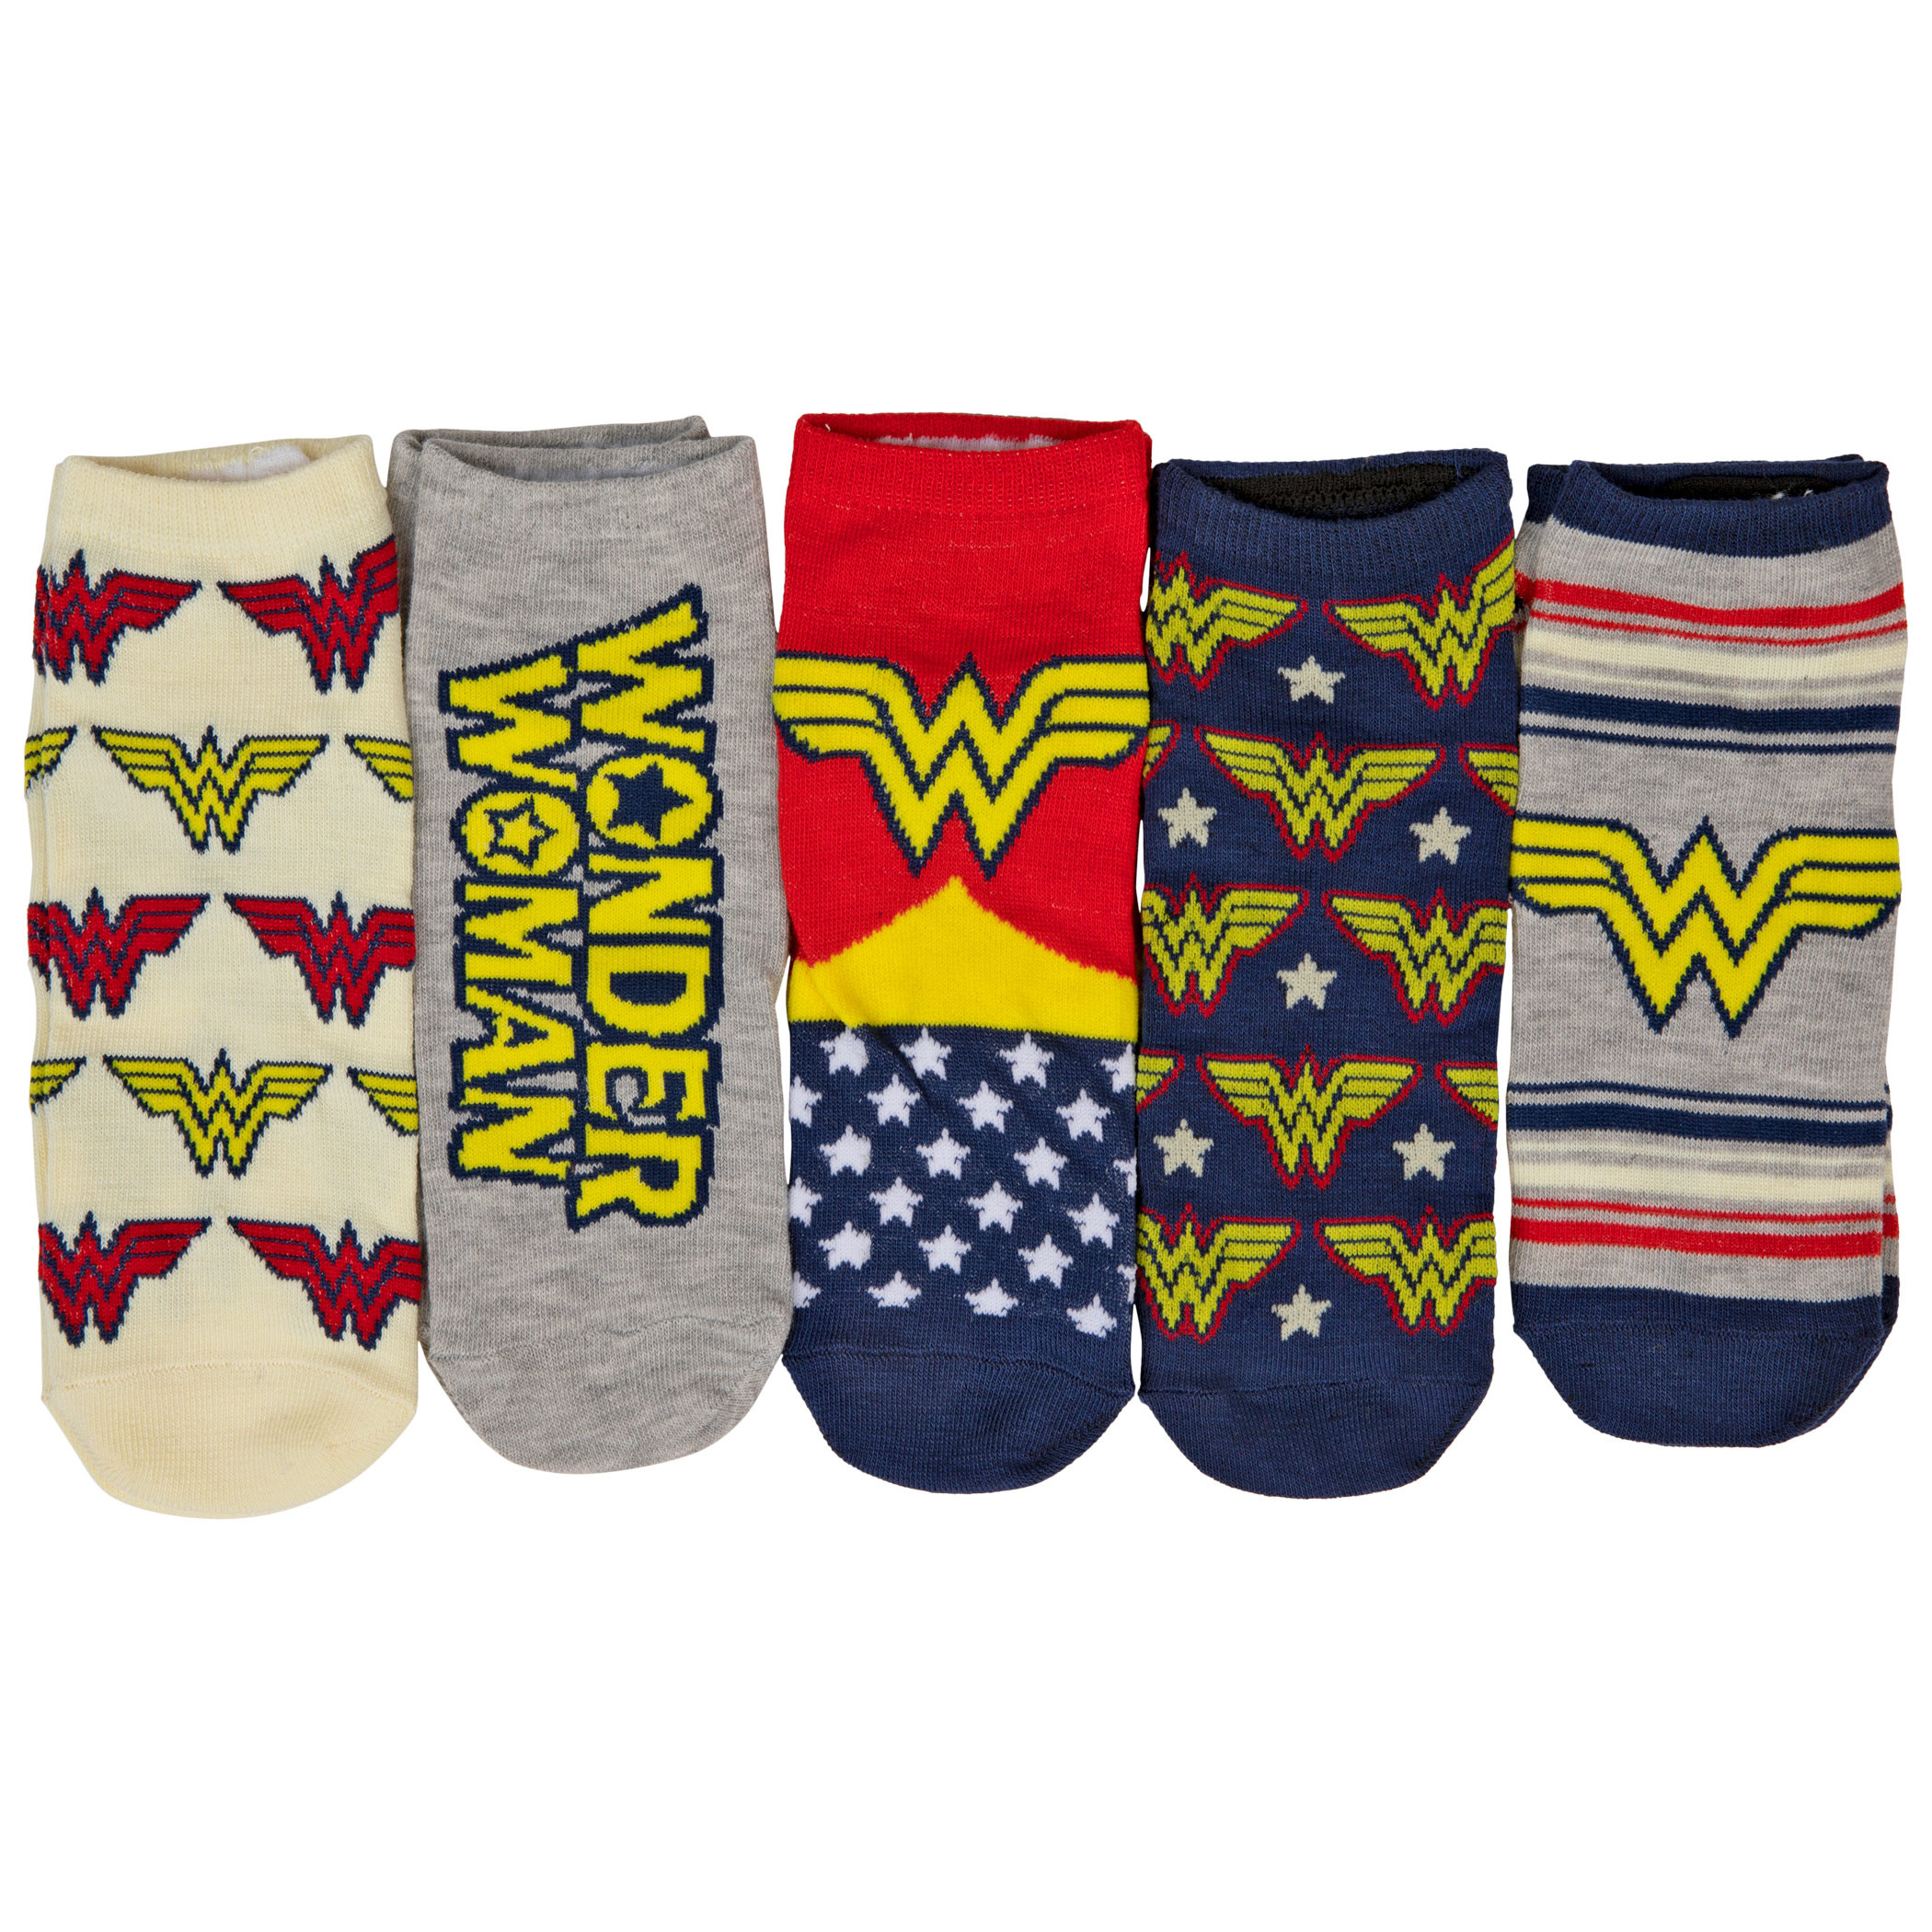 Wonder Woman Logos and Symbols Women's 5-Pack of Shorties Socks